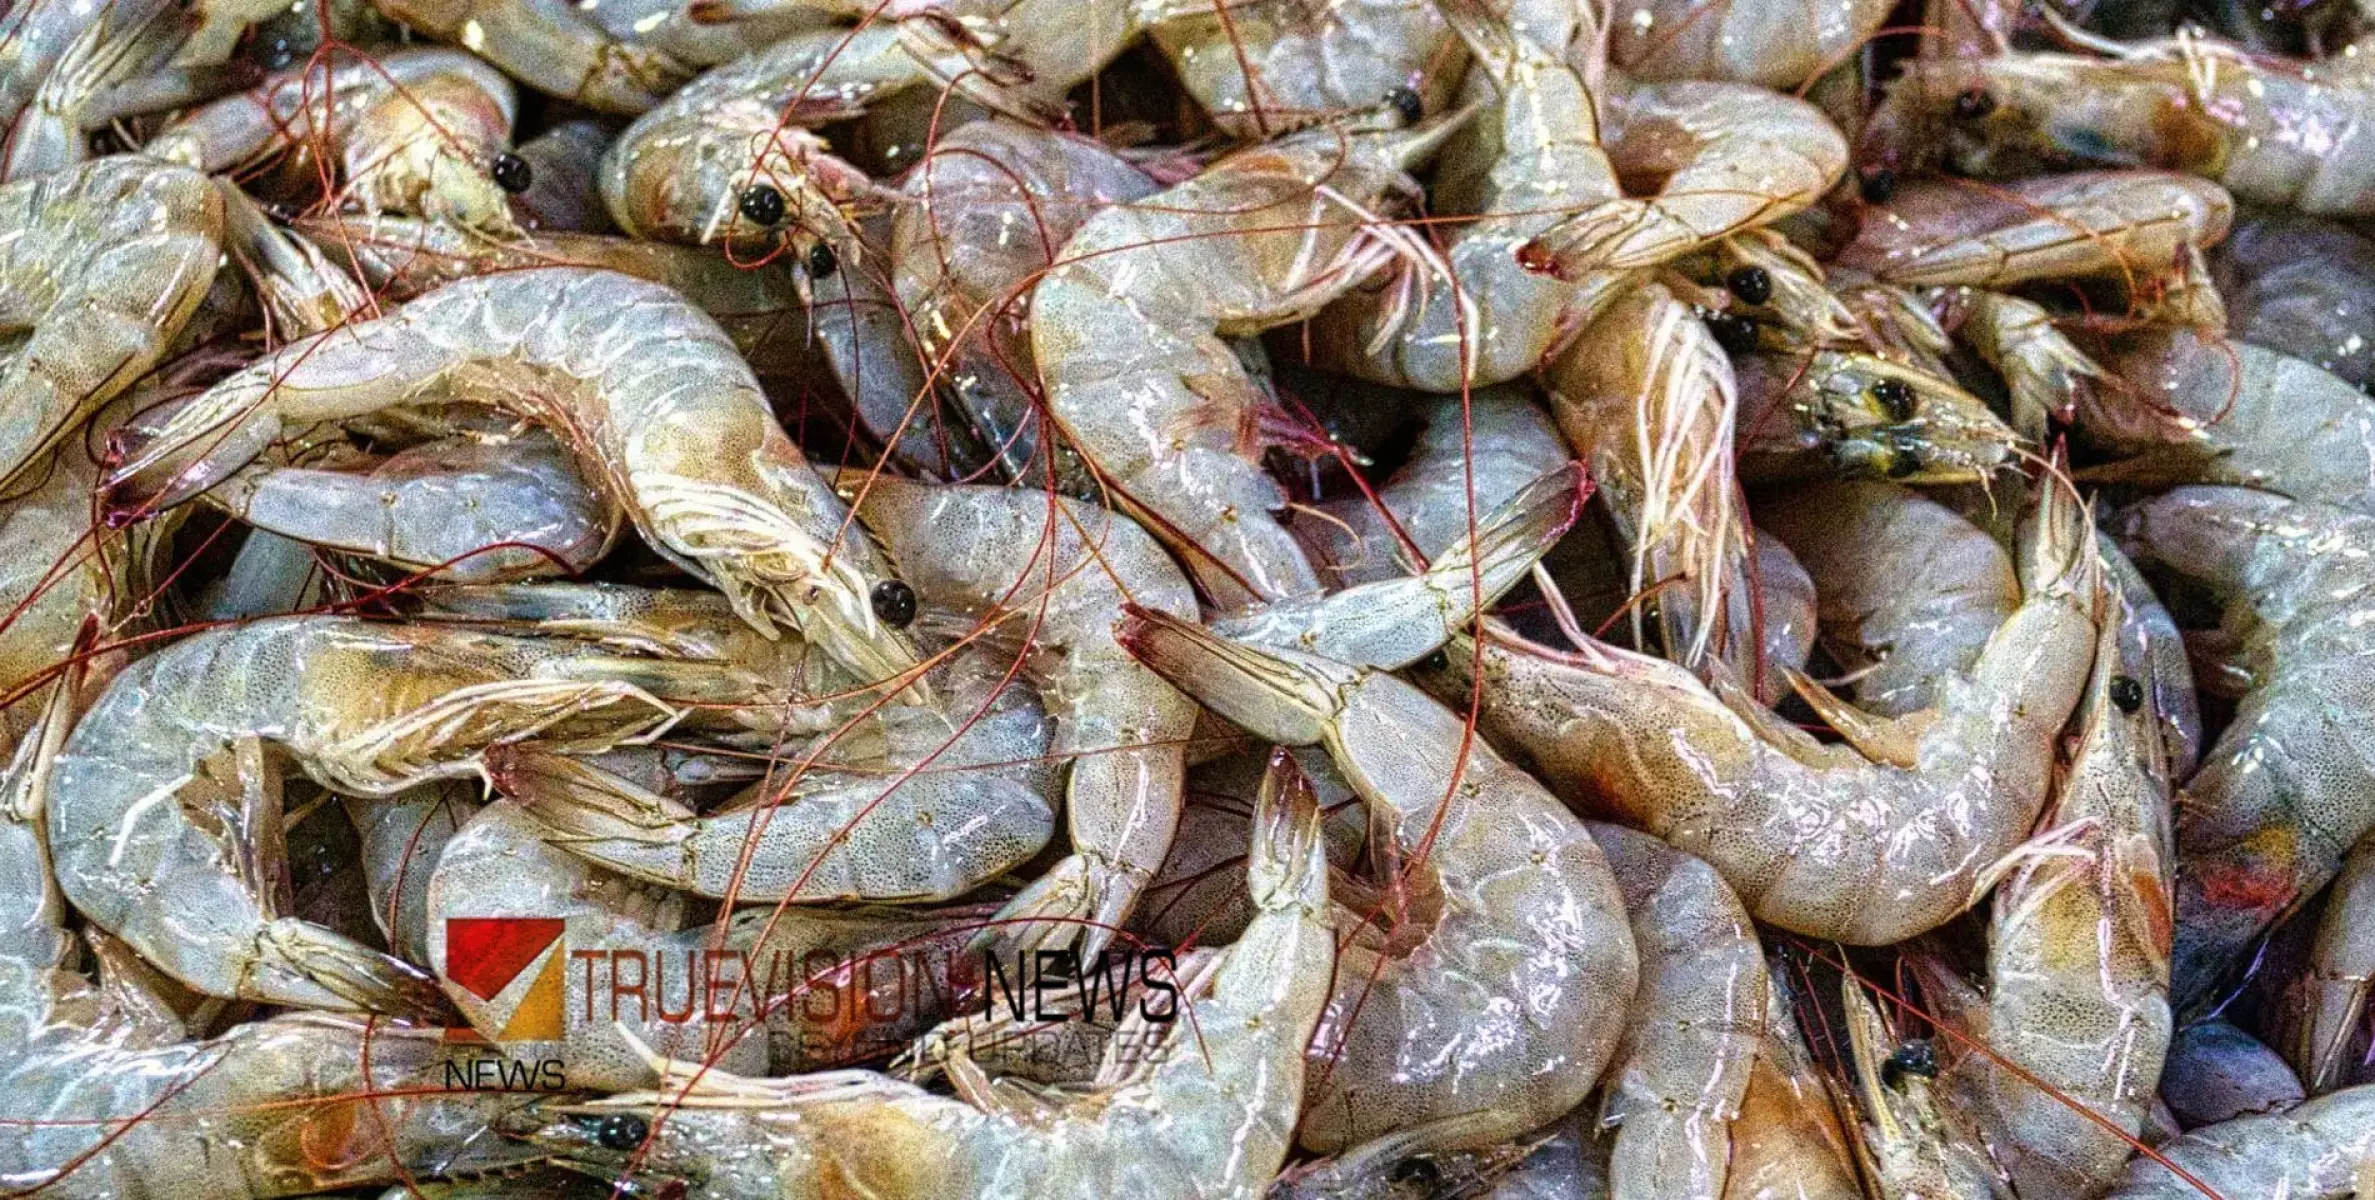 #Shrimp | കണ്ണൂർ ജില്ലയിൽ ചെമ്മീൻ ചാകരക്കാലം